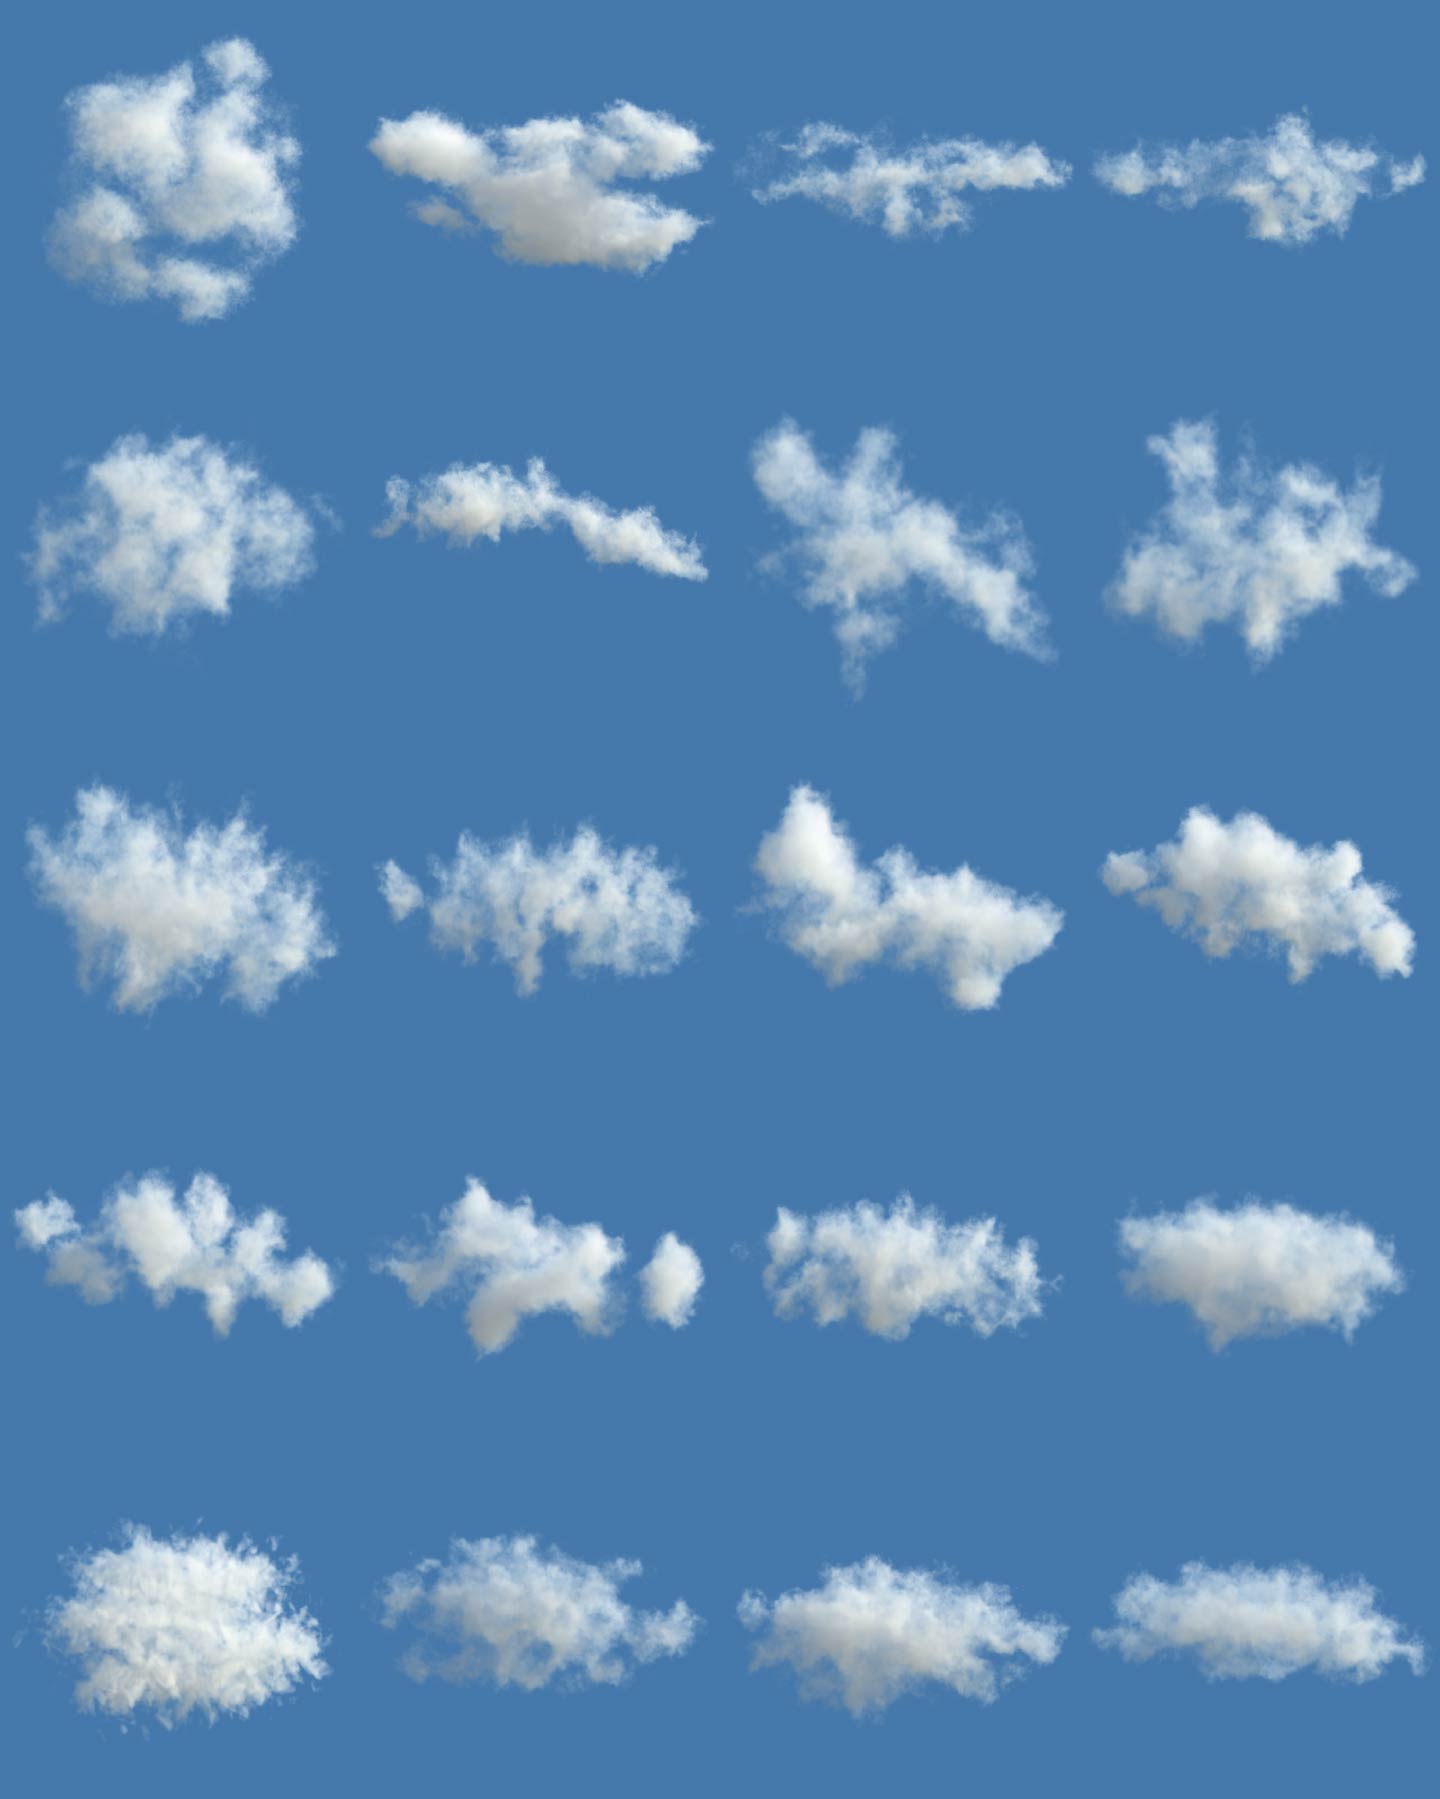 cloudscapes_blender_stratus.jpg